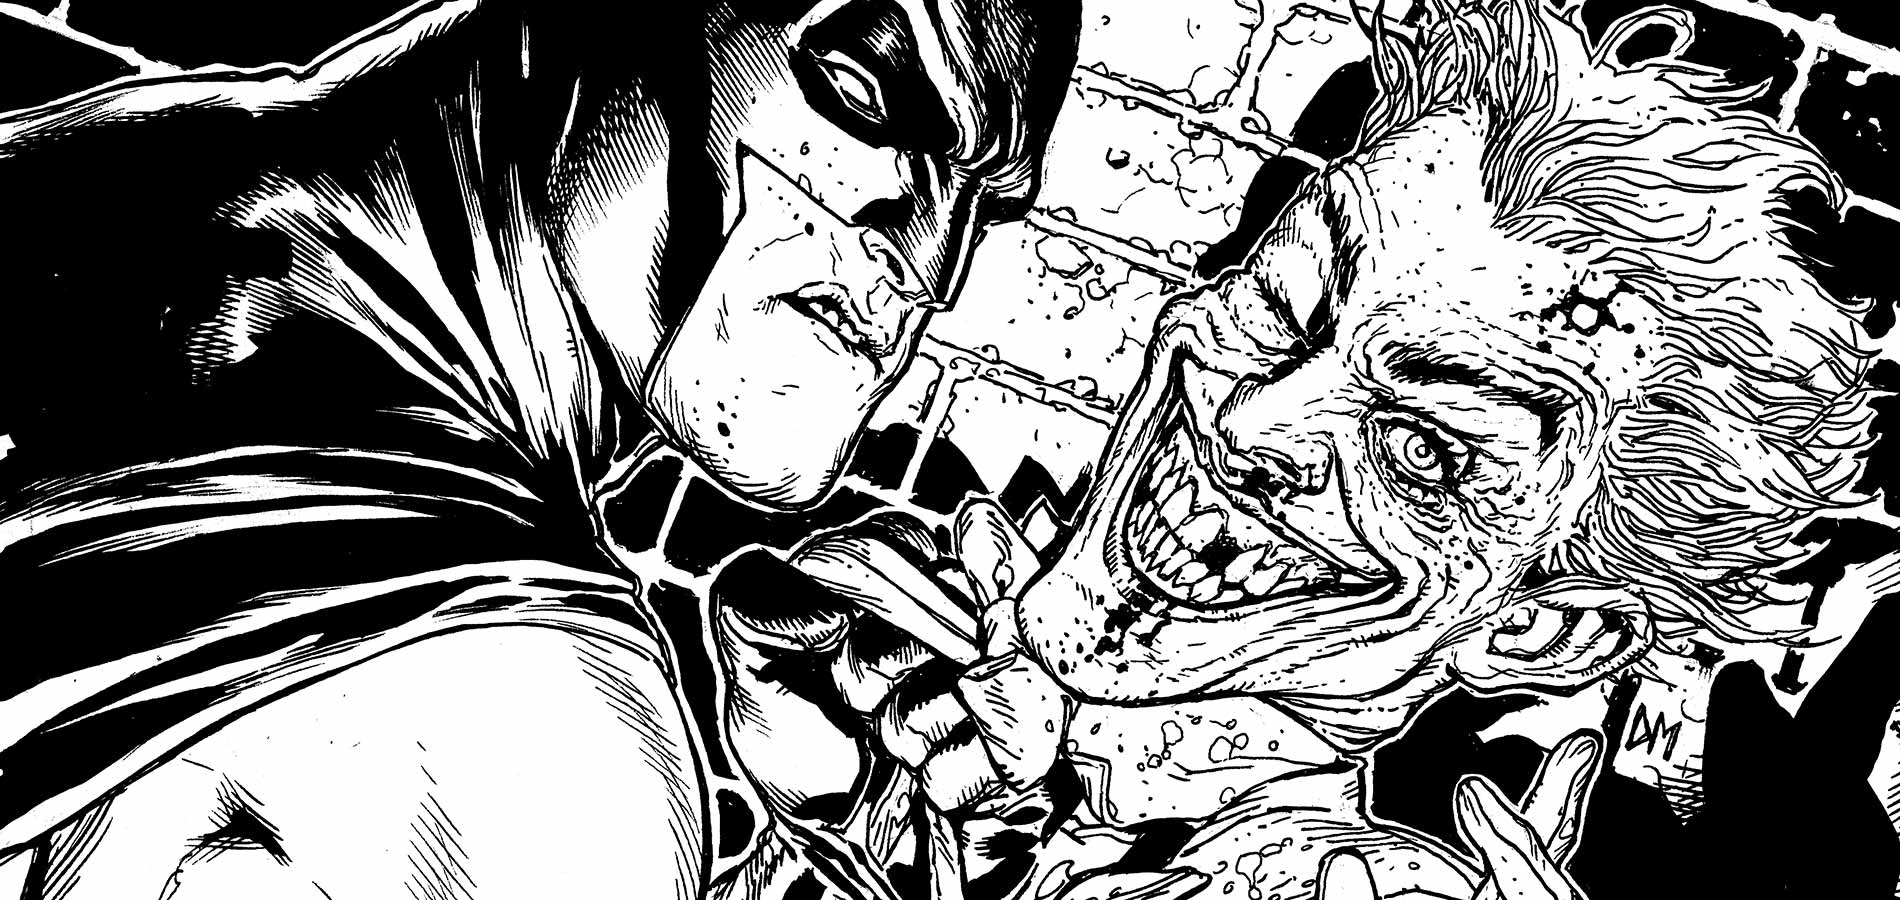 Black and White DC Comics Superhero Logo - BATMAN BLACK AND WHITE